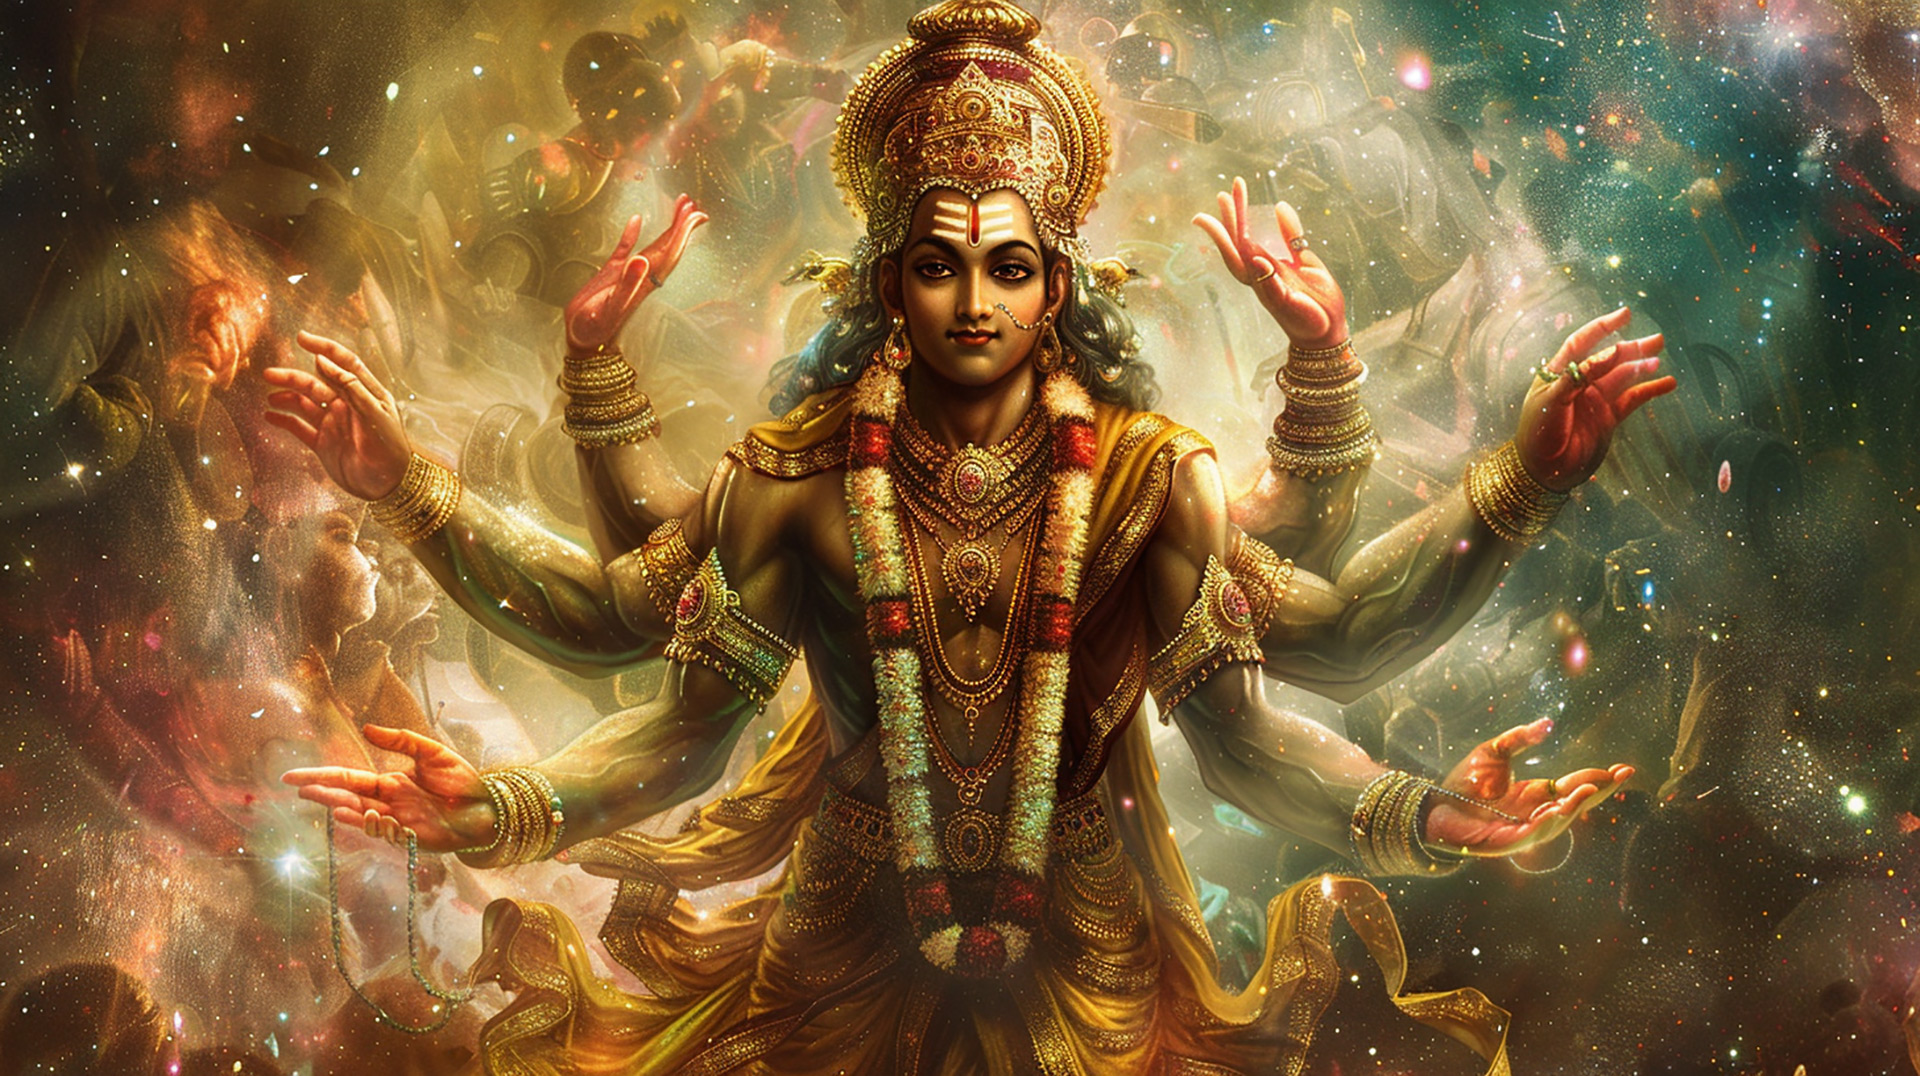 Vishnu's Grace: Digital Art of Lord Vishnu